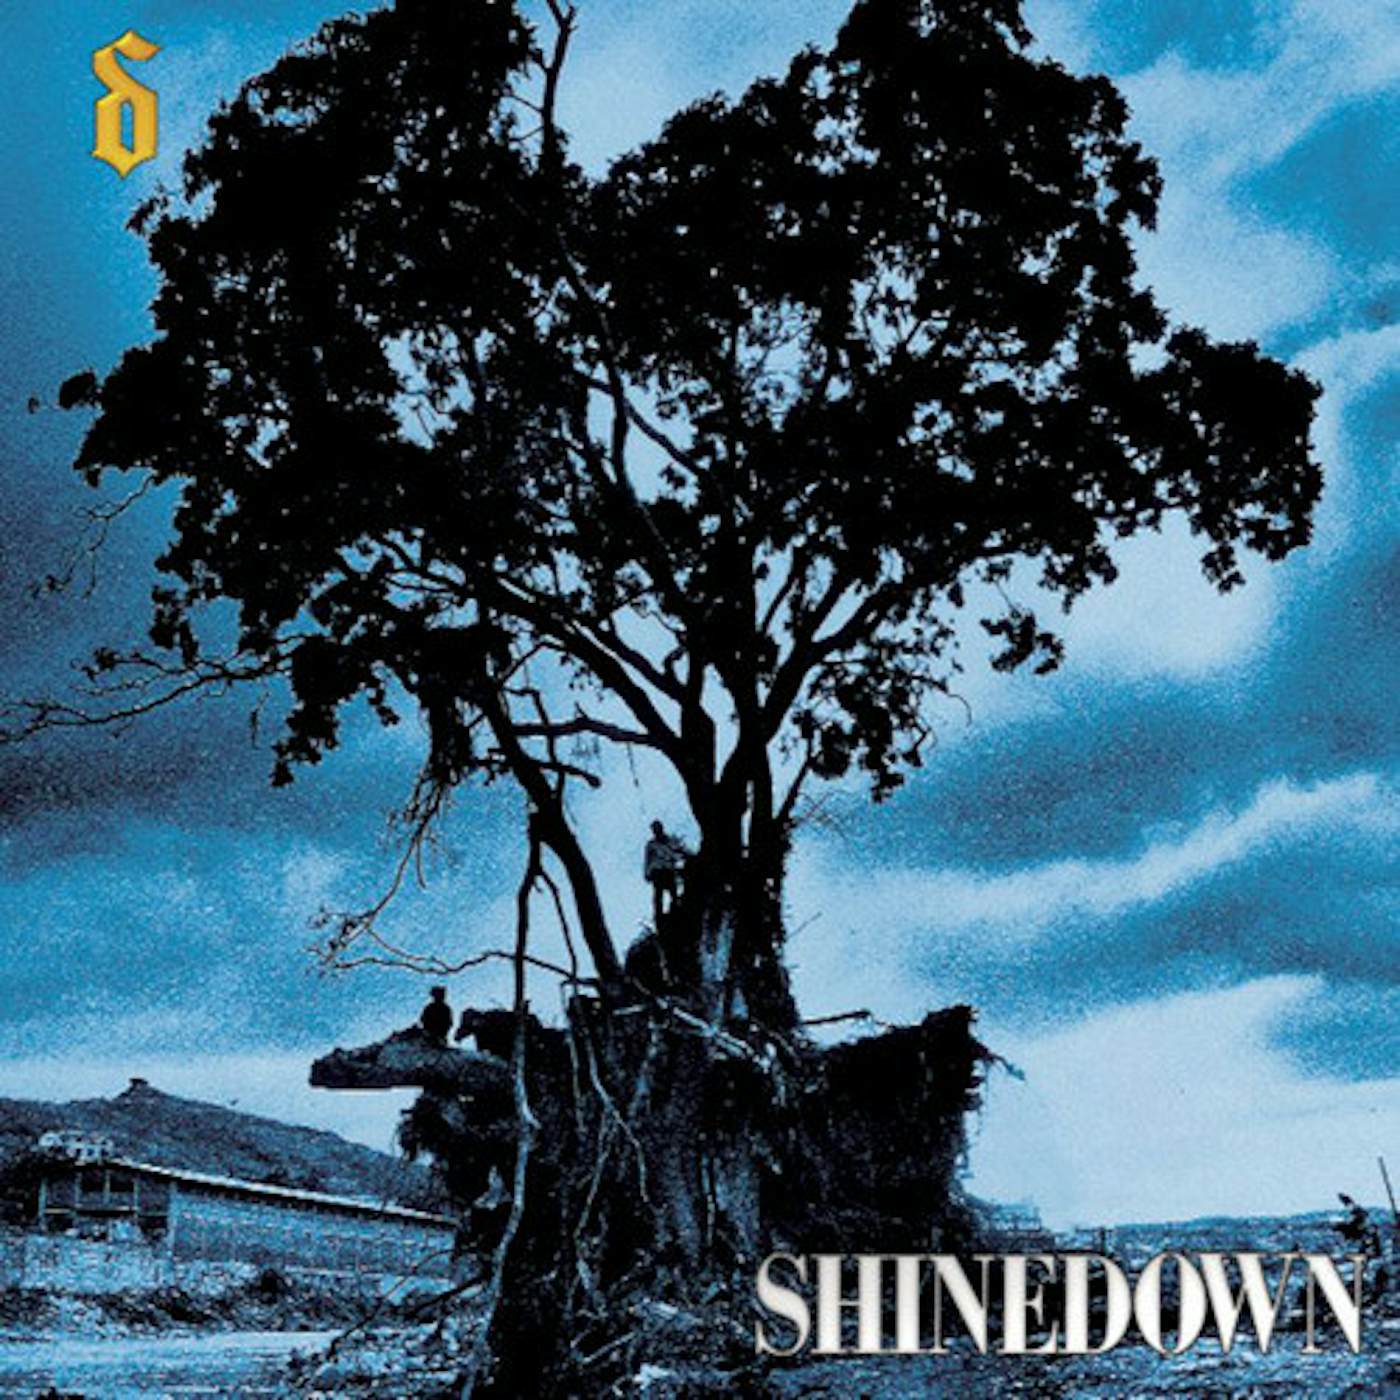 Shinedown Leave a Whisper Vinyl Record